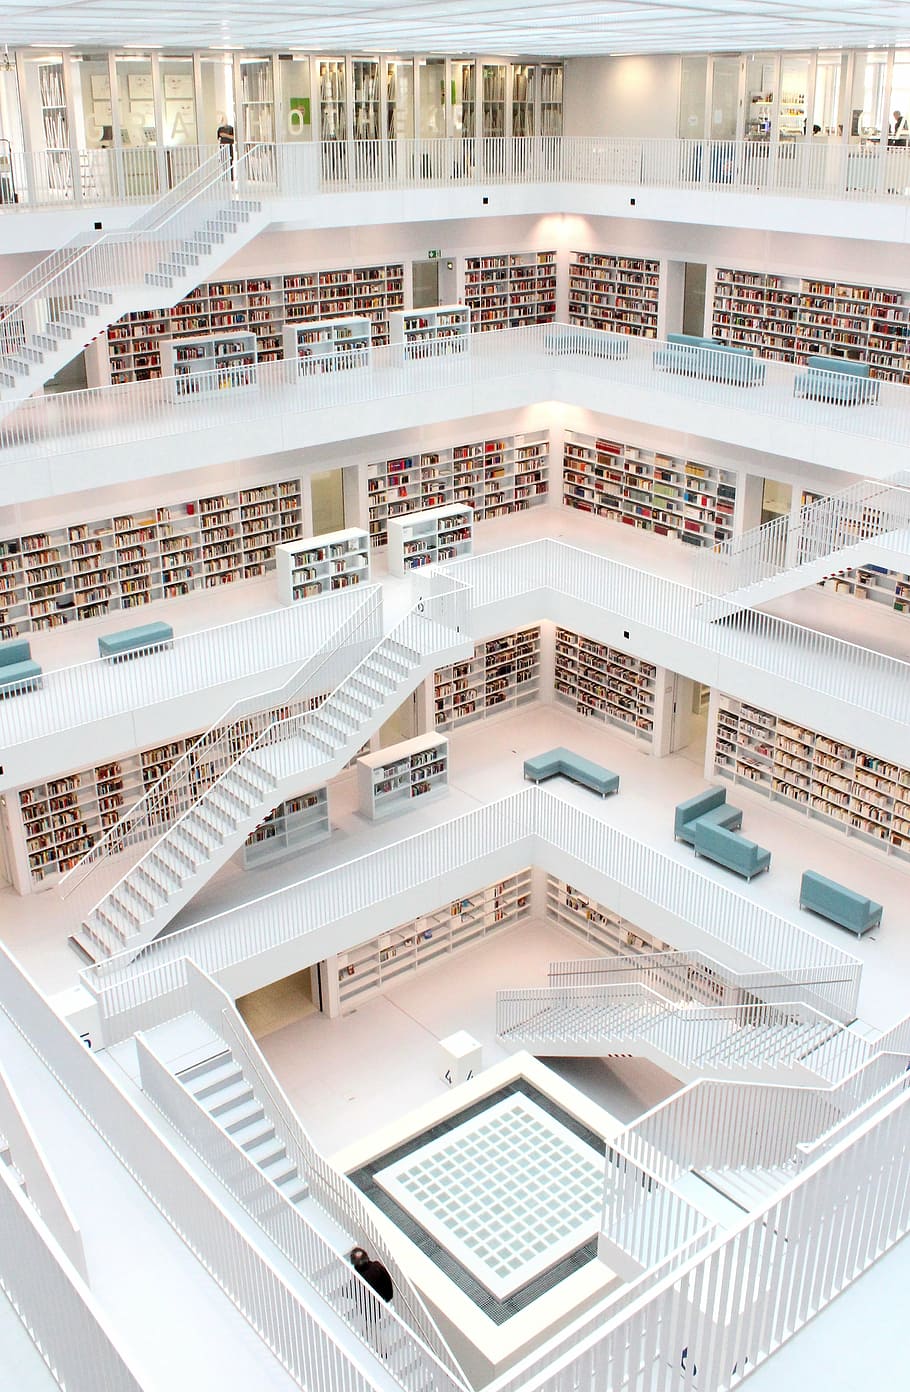 blanco, interior, perspectiva de edificio, biblioteca, arquitectura, stuttgart, moderno, saber, estudiar, aprender